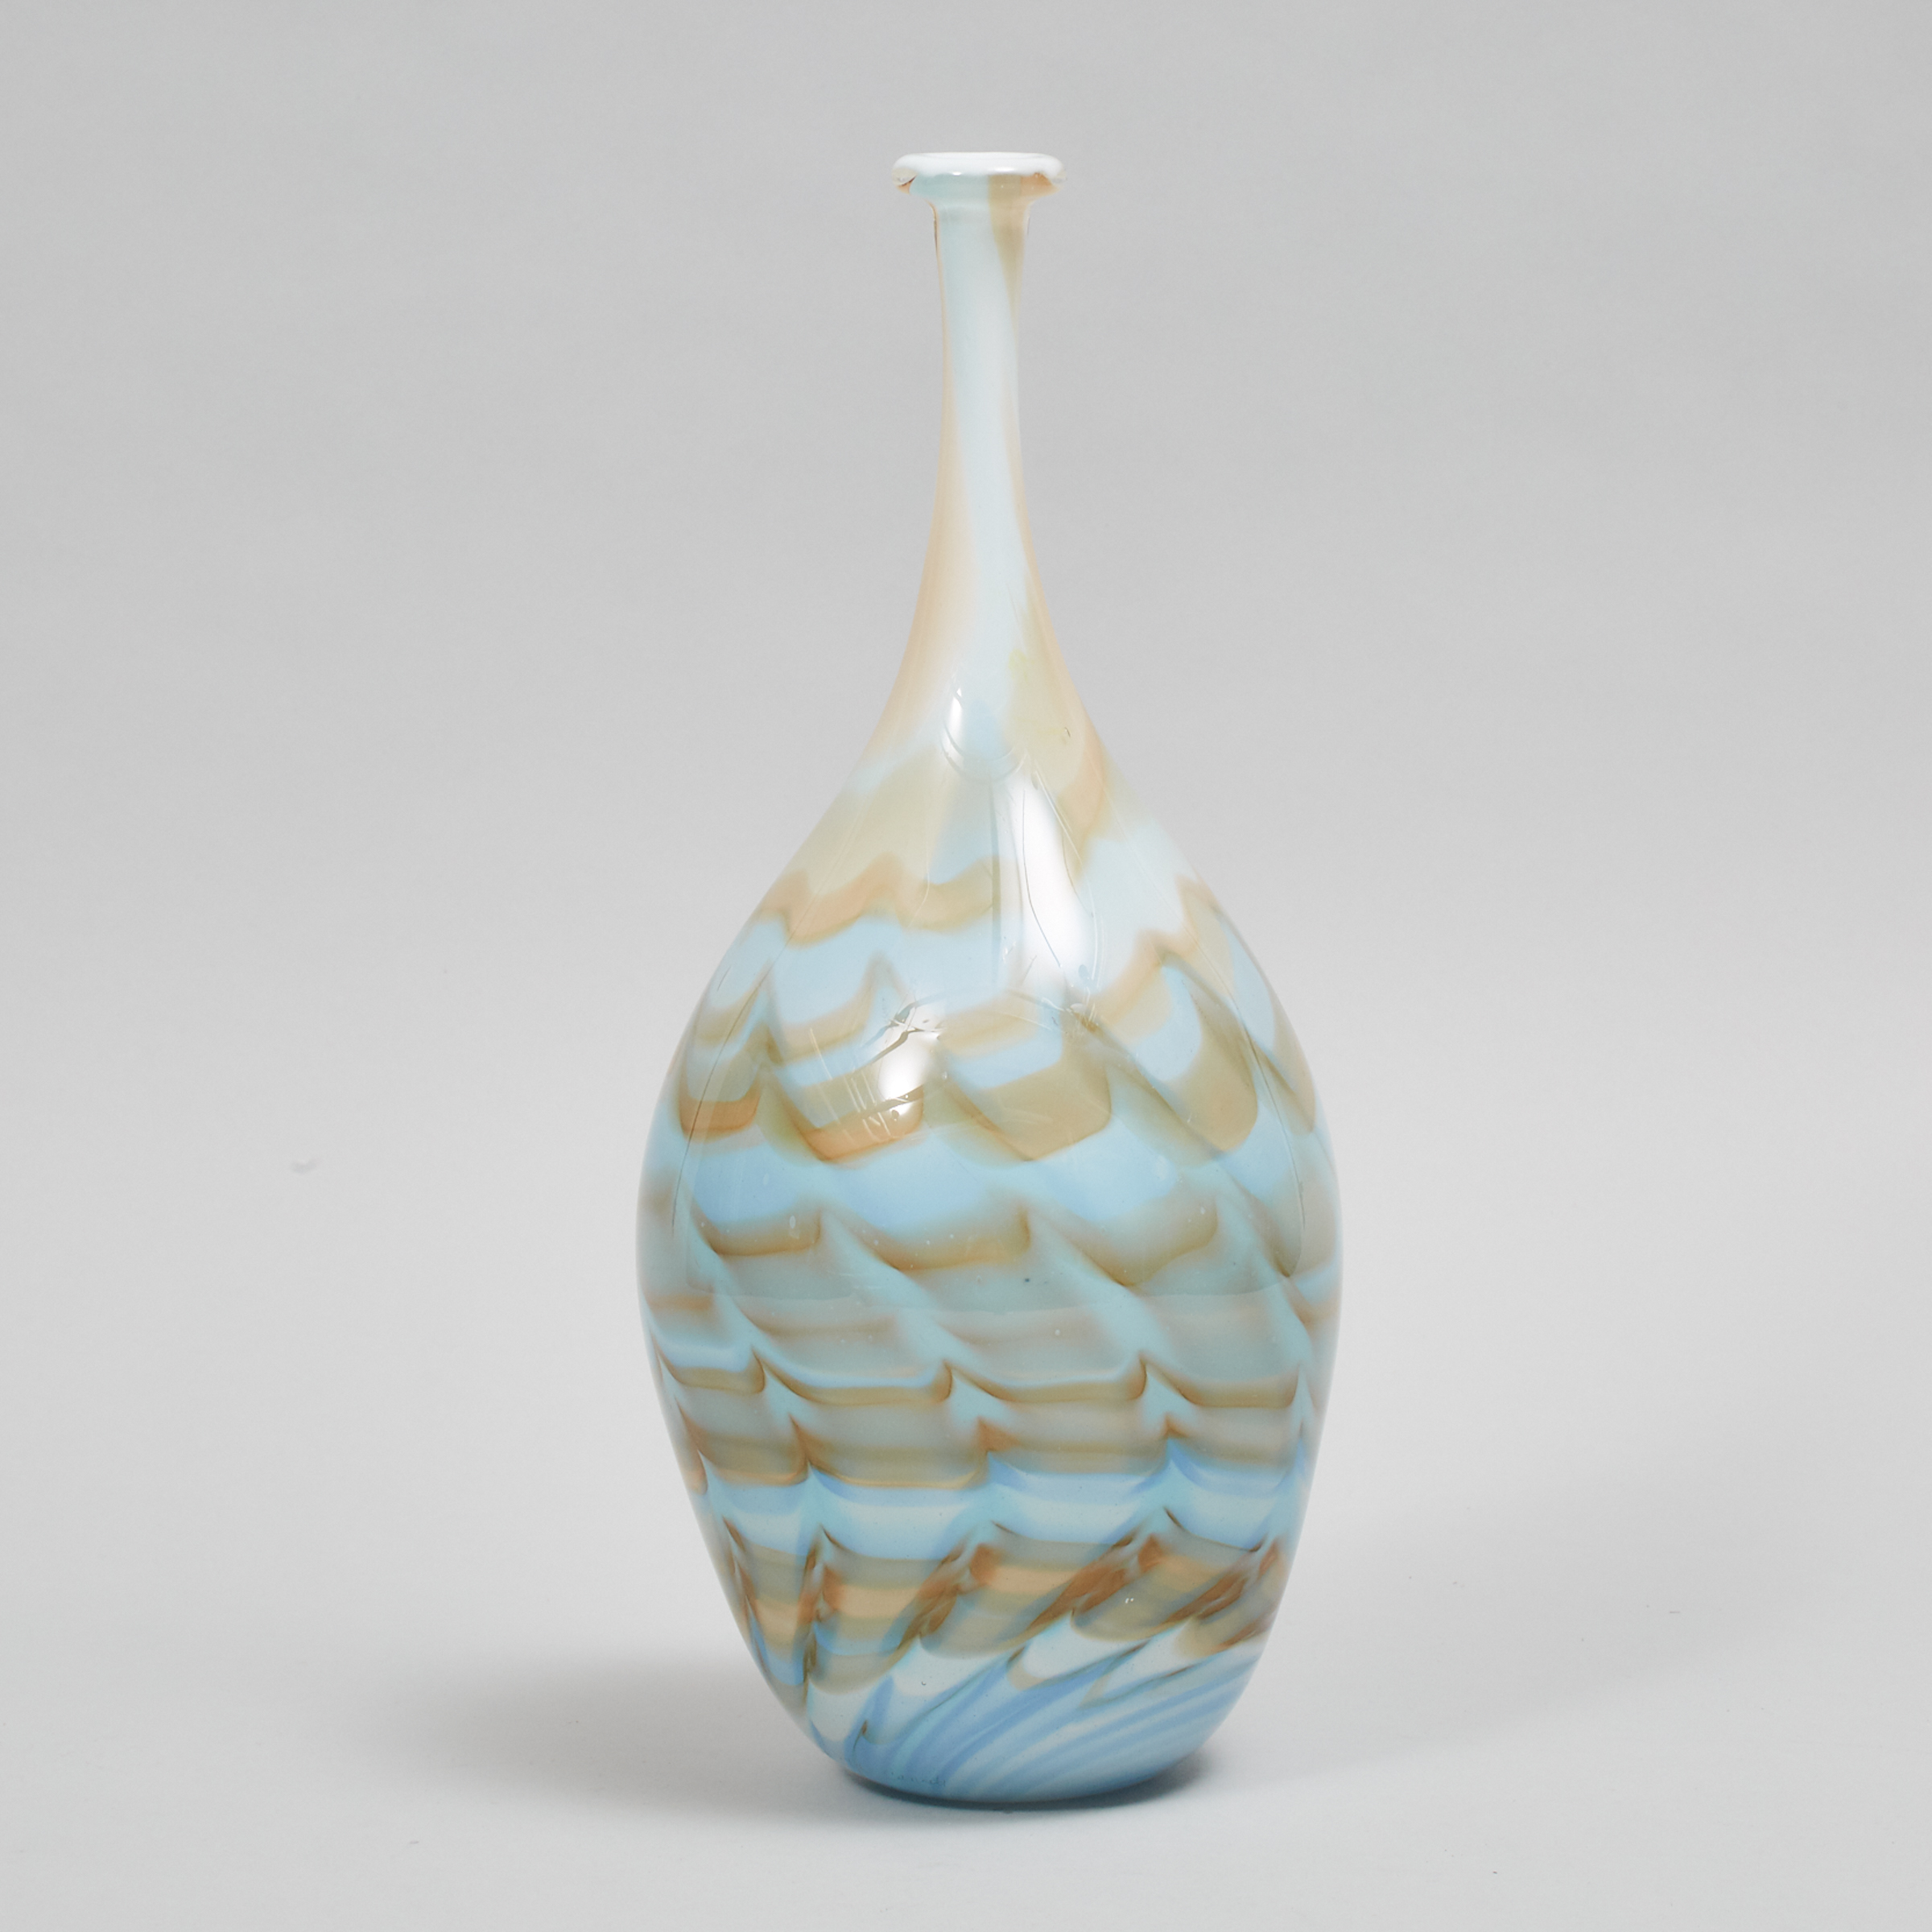 Robert Held (American-Canadian, b.1943), Glass Vase, 1976